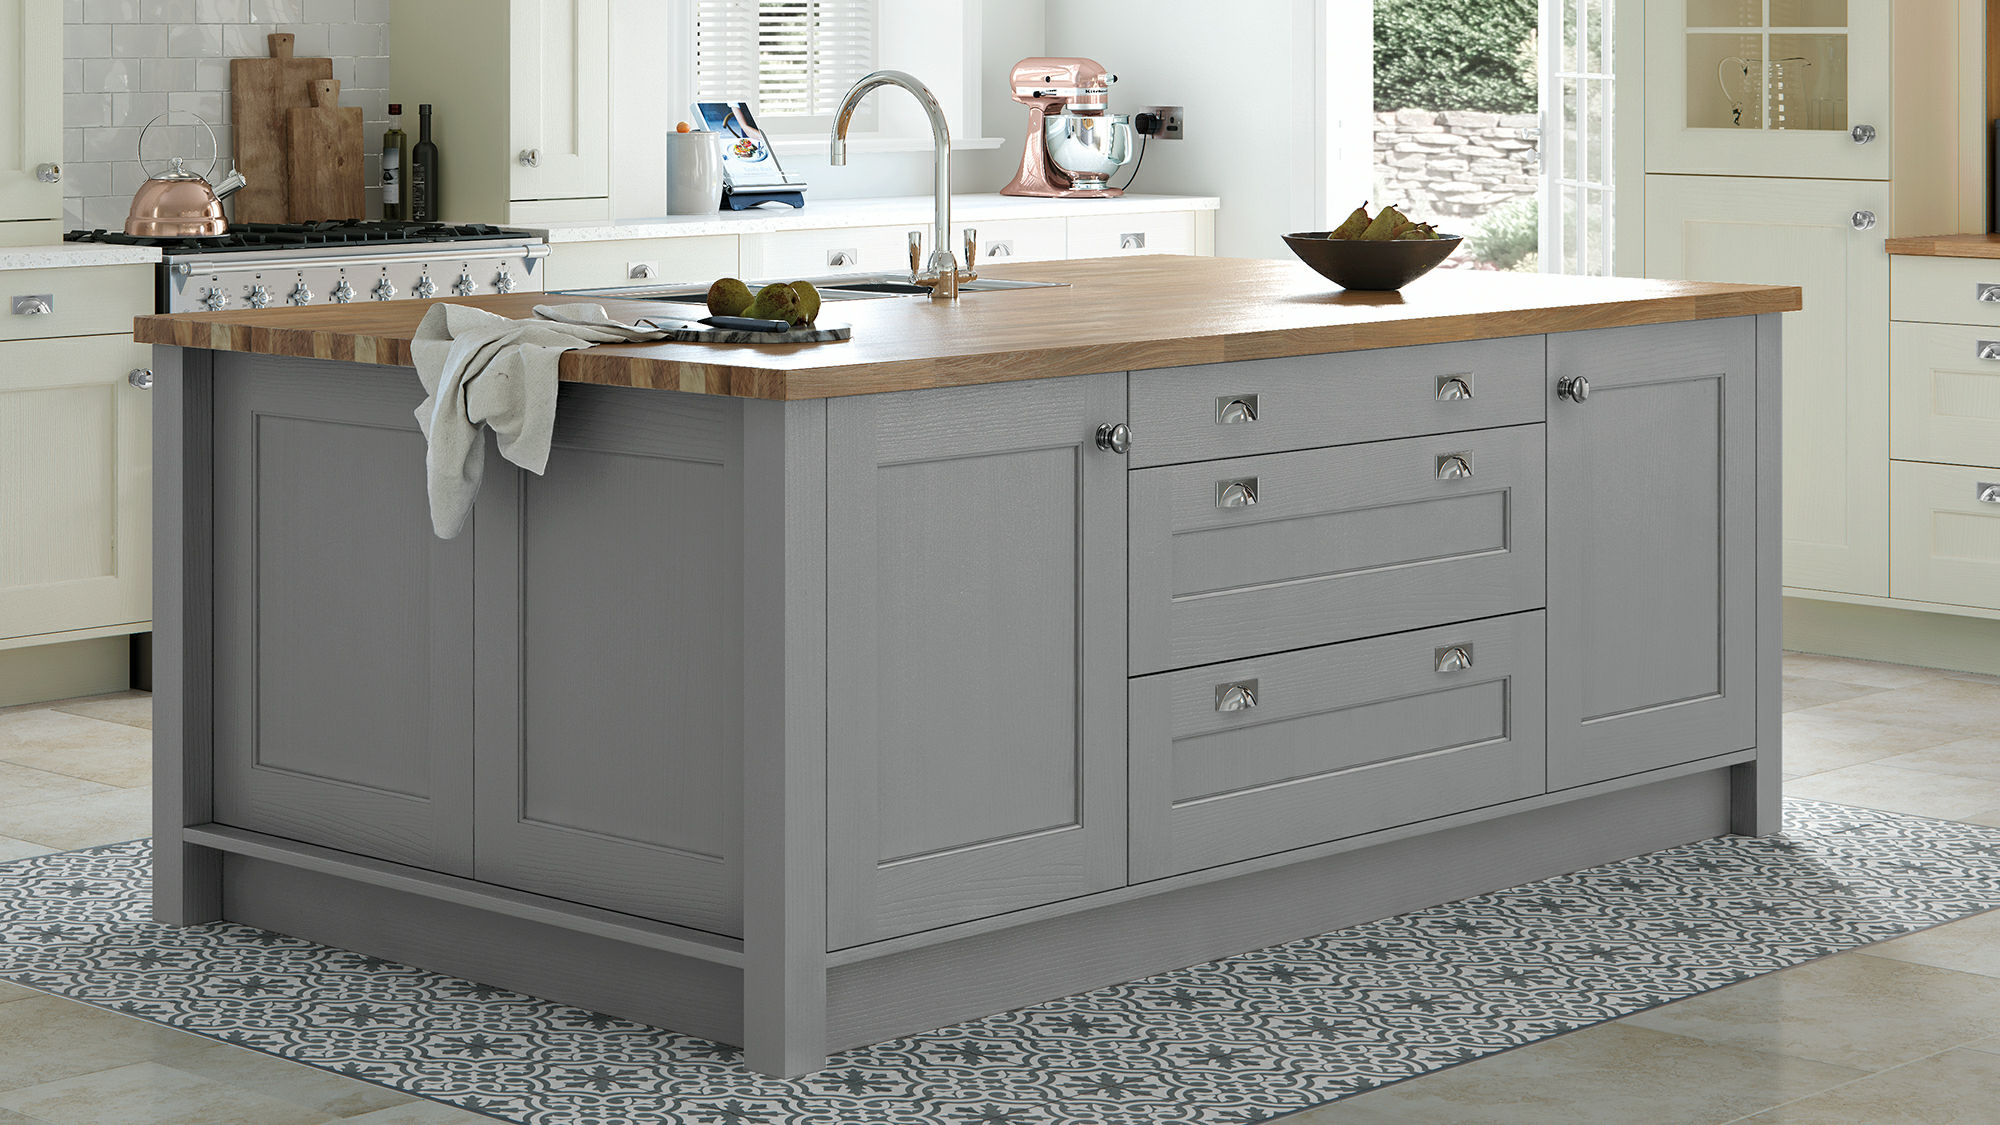 Wakefield solid wood dust grey kitchens showcasing artisanal quality in a sleek dust grey colorway